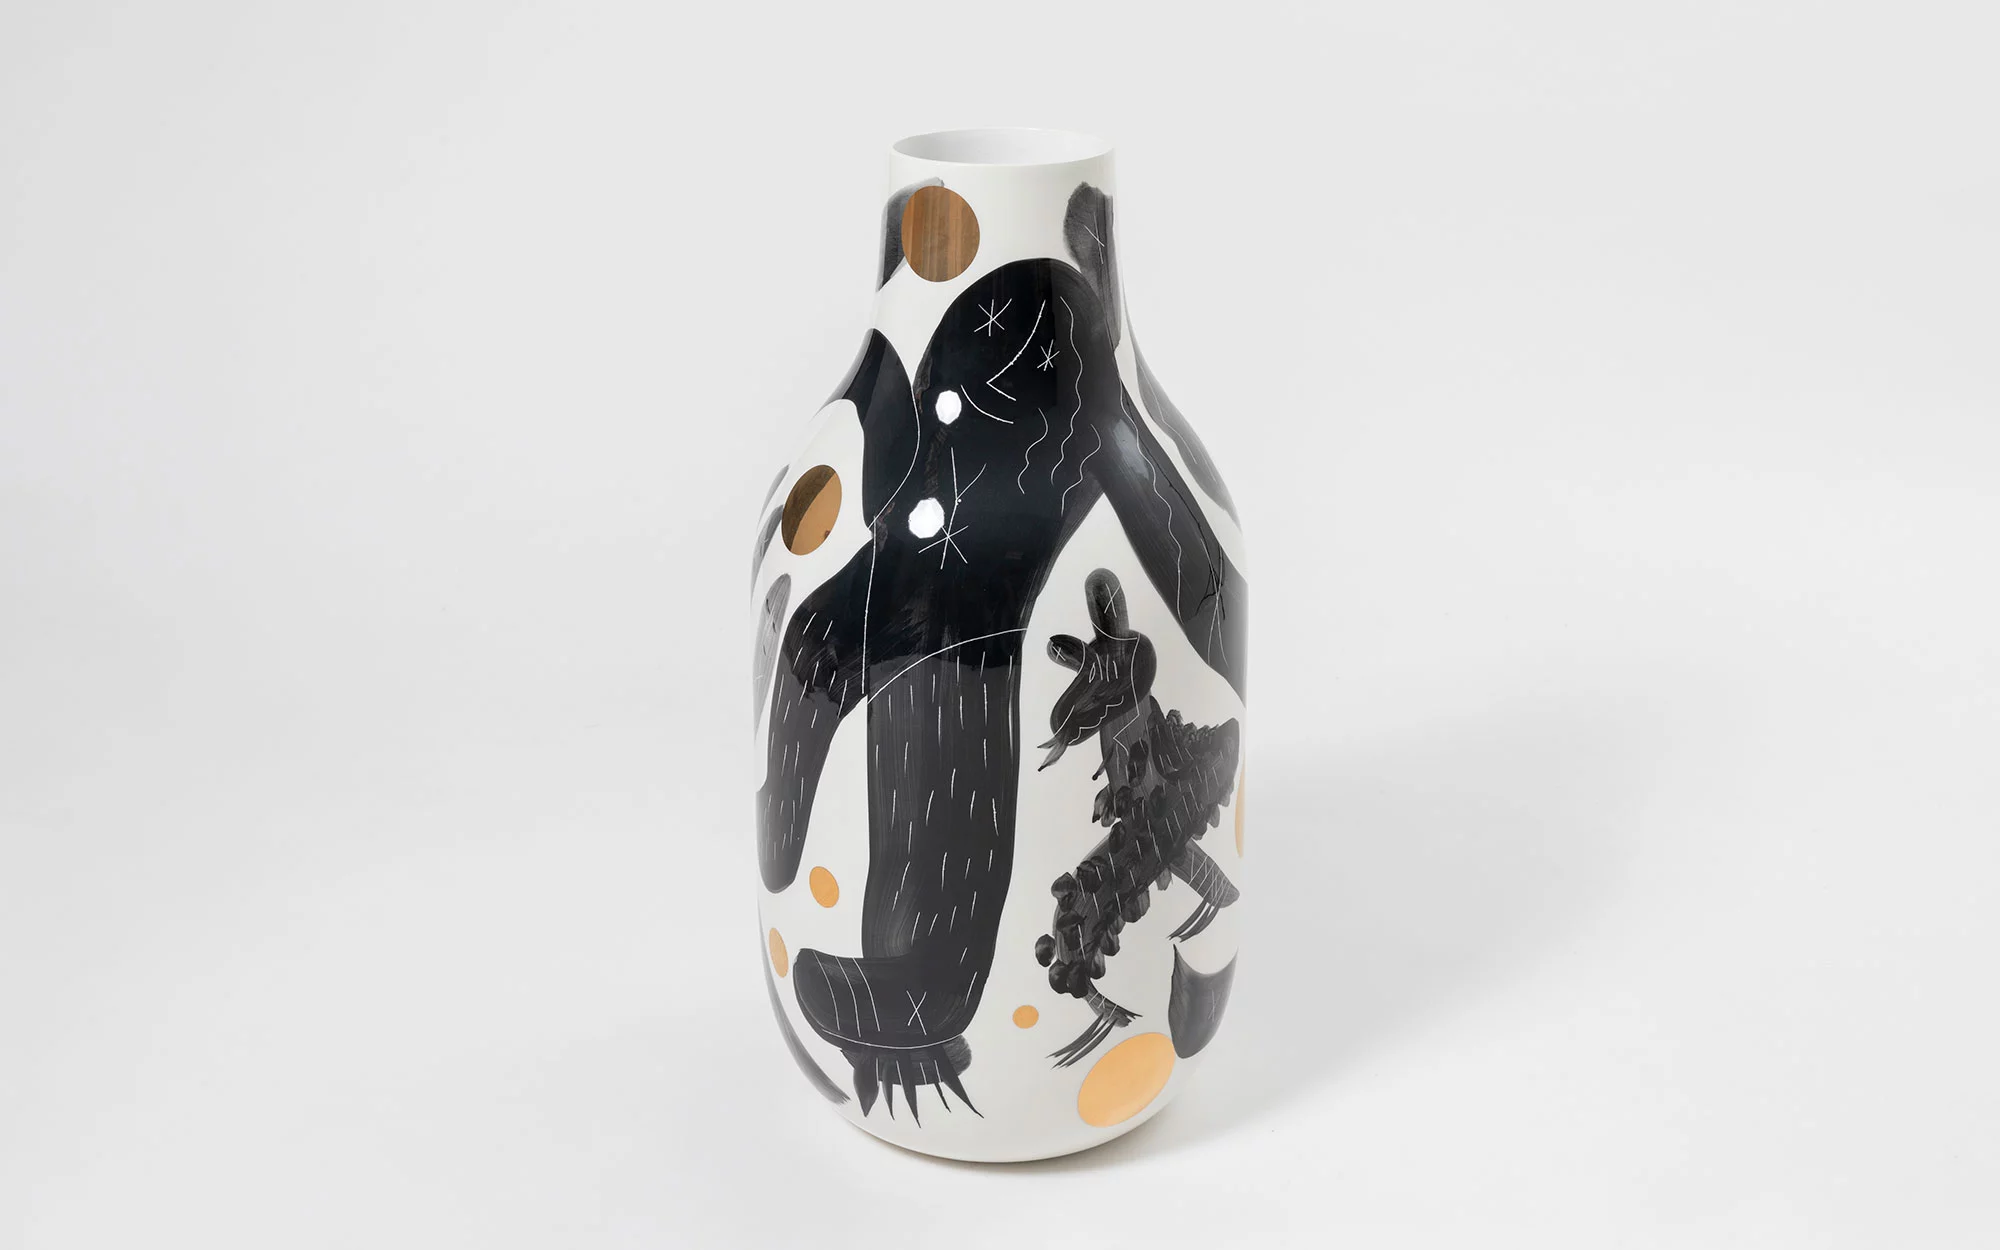 Chromatico Vase - Jaime Hayon - Wall light - Galerie kreo